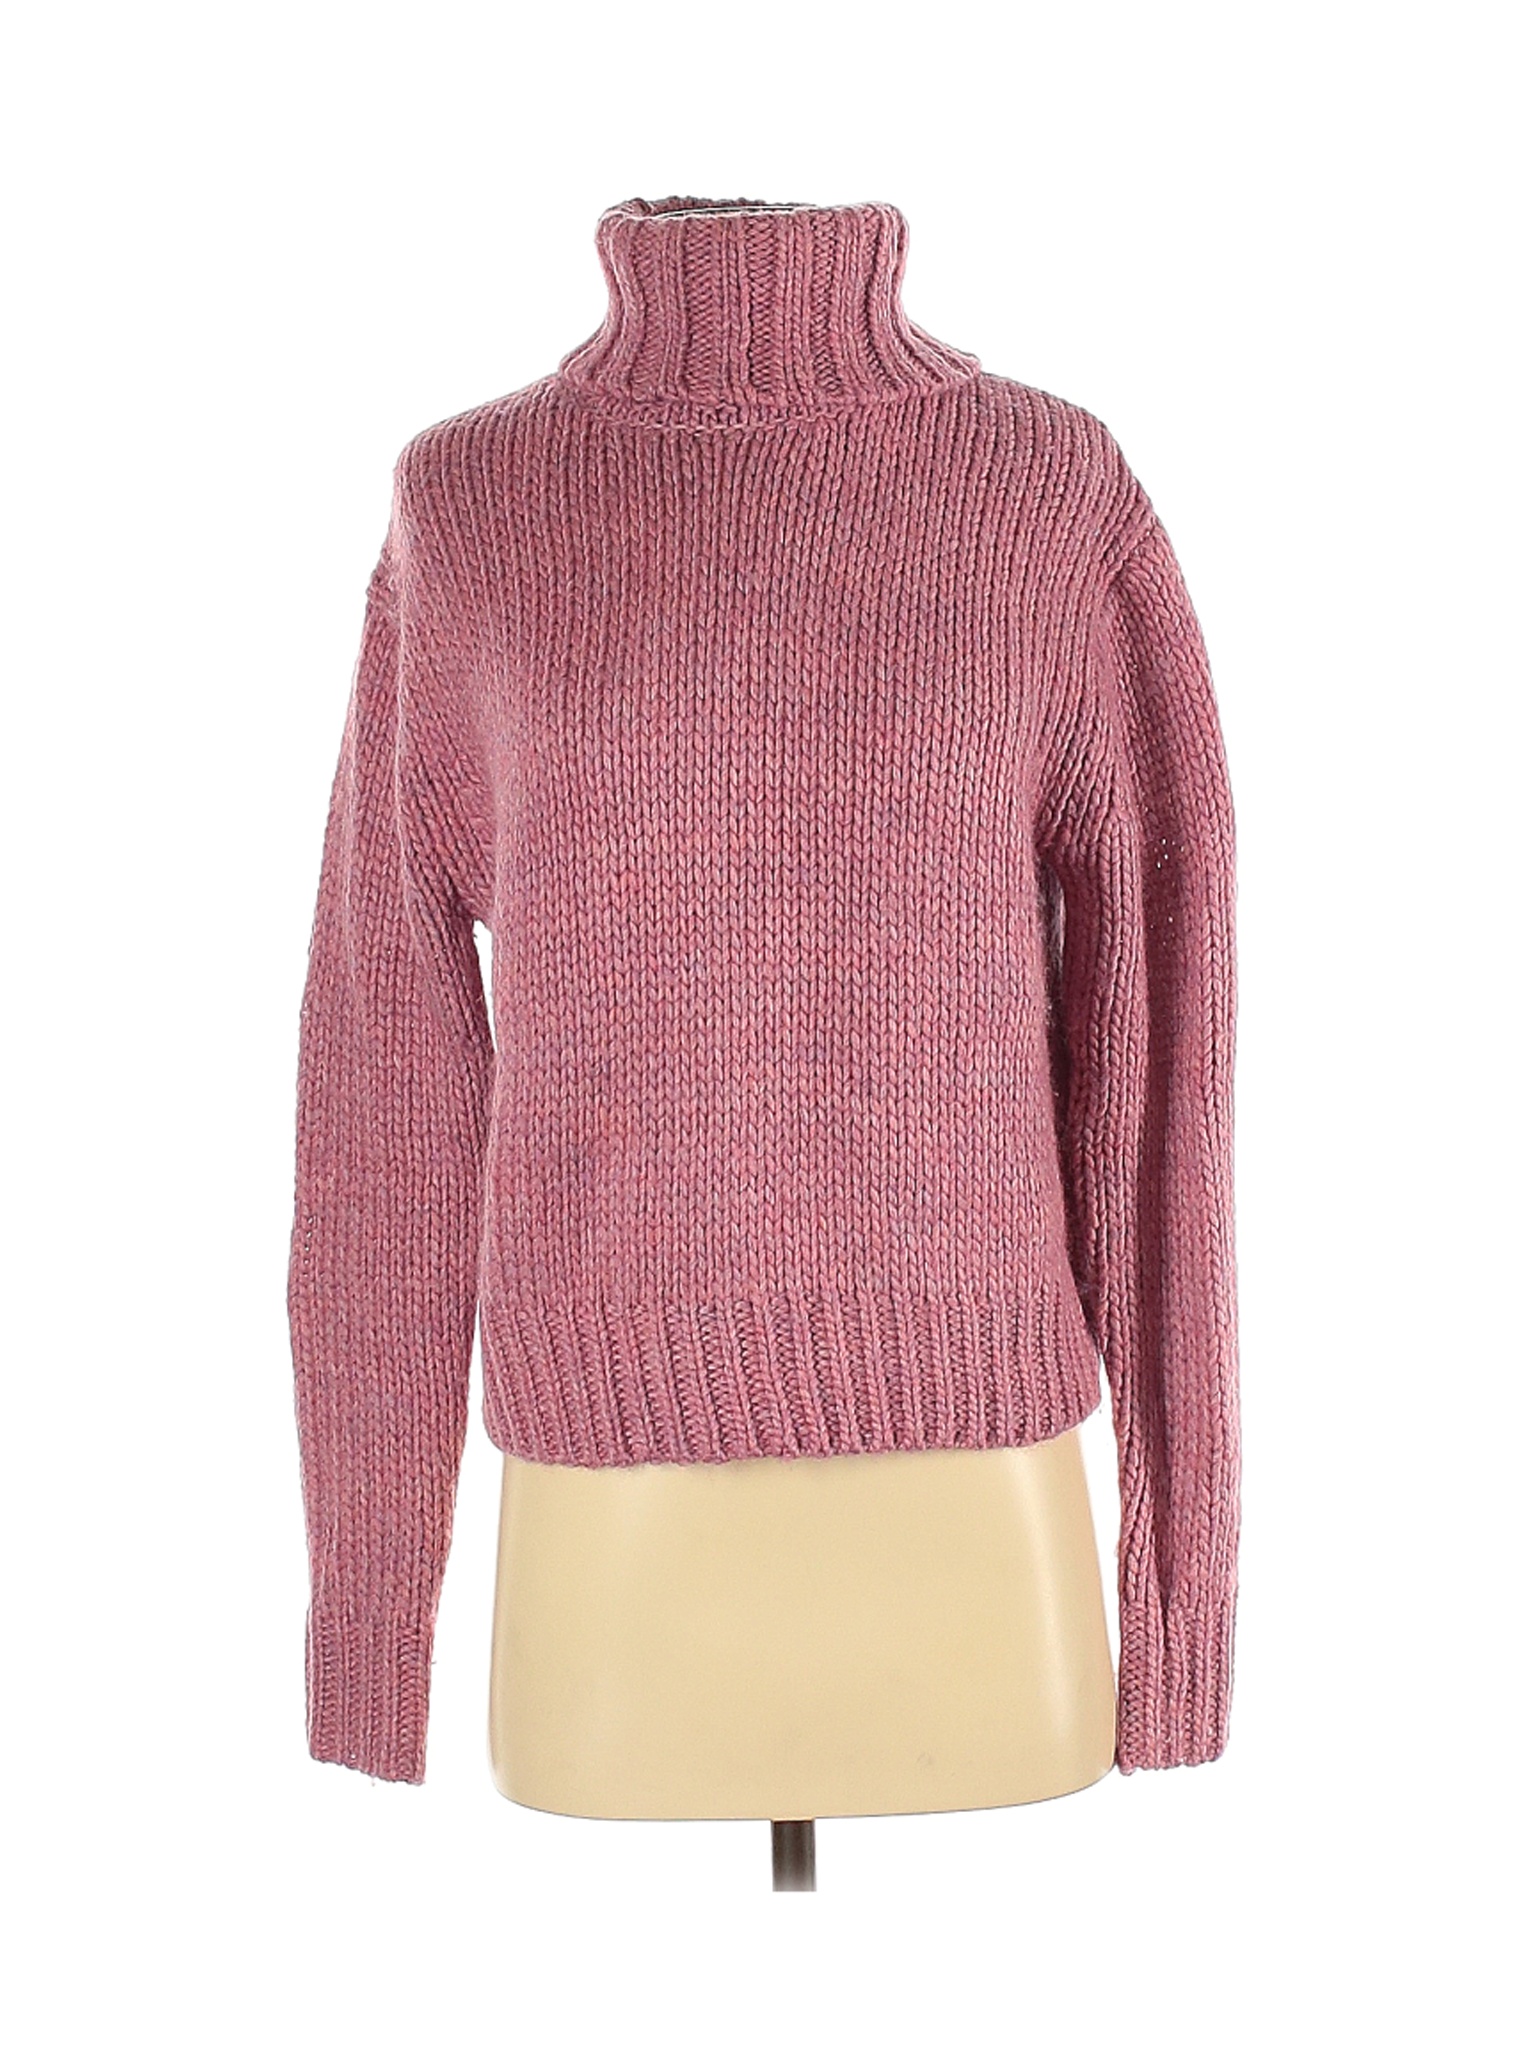 J.Crew Women Pink Turtleneck Sweater XS | eBay